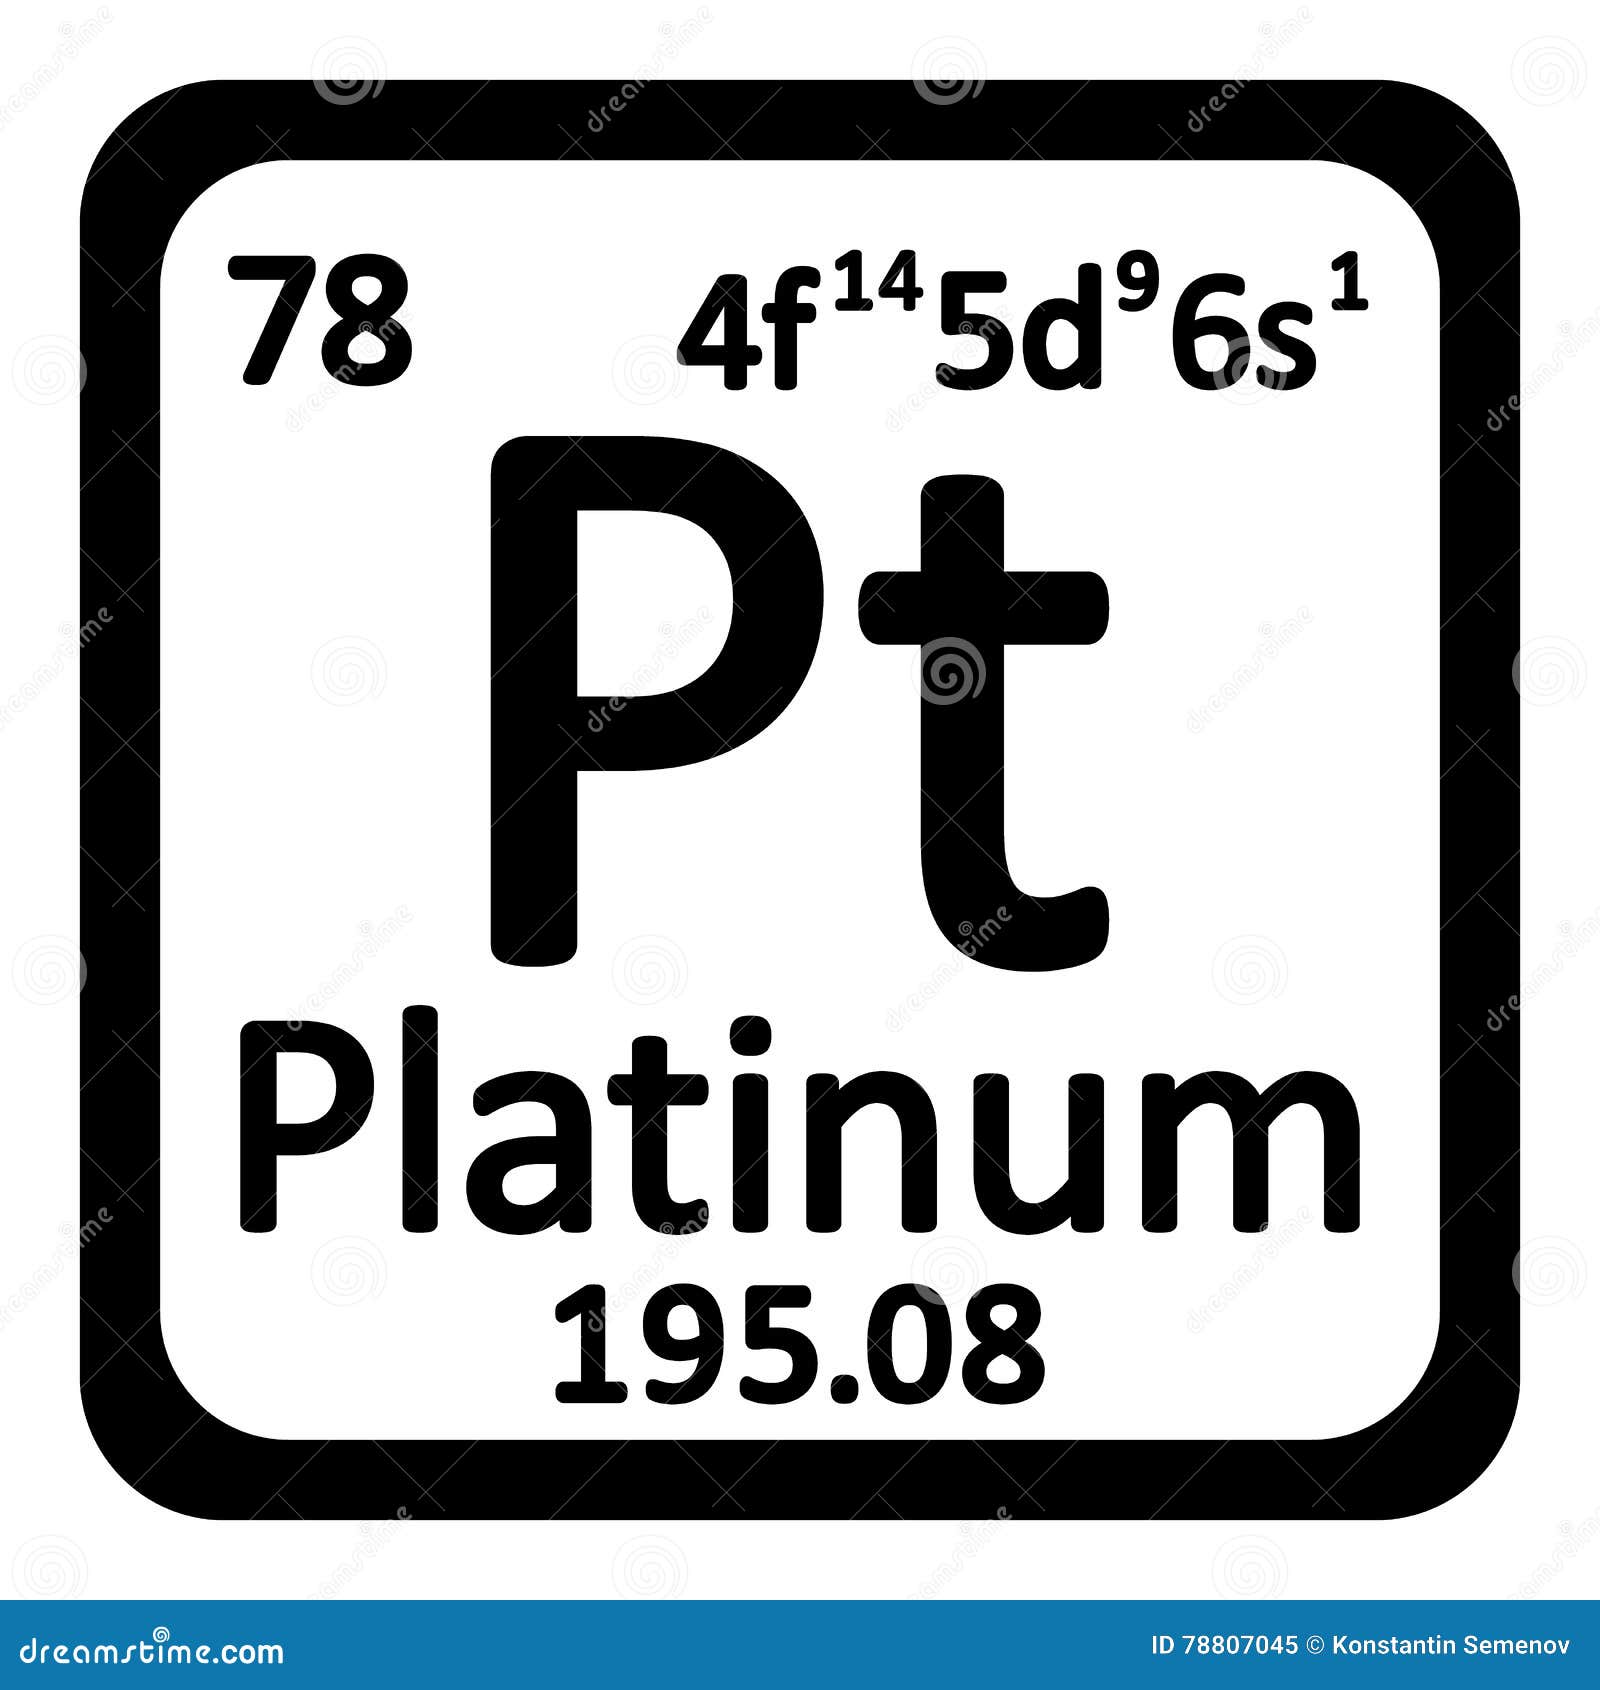 Платина какой элемент. Платина элемент таблицы Менделеева. Химический элемент платино. Платина химия элемент. Платина элемент символ.